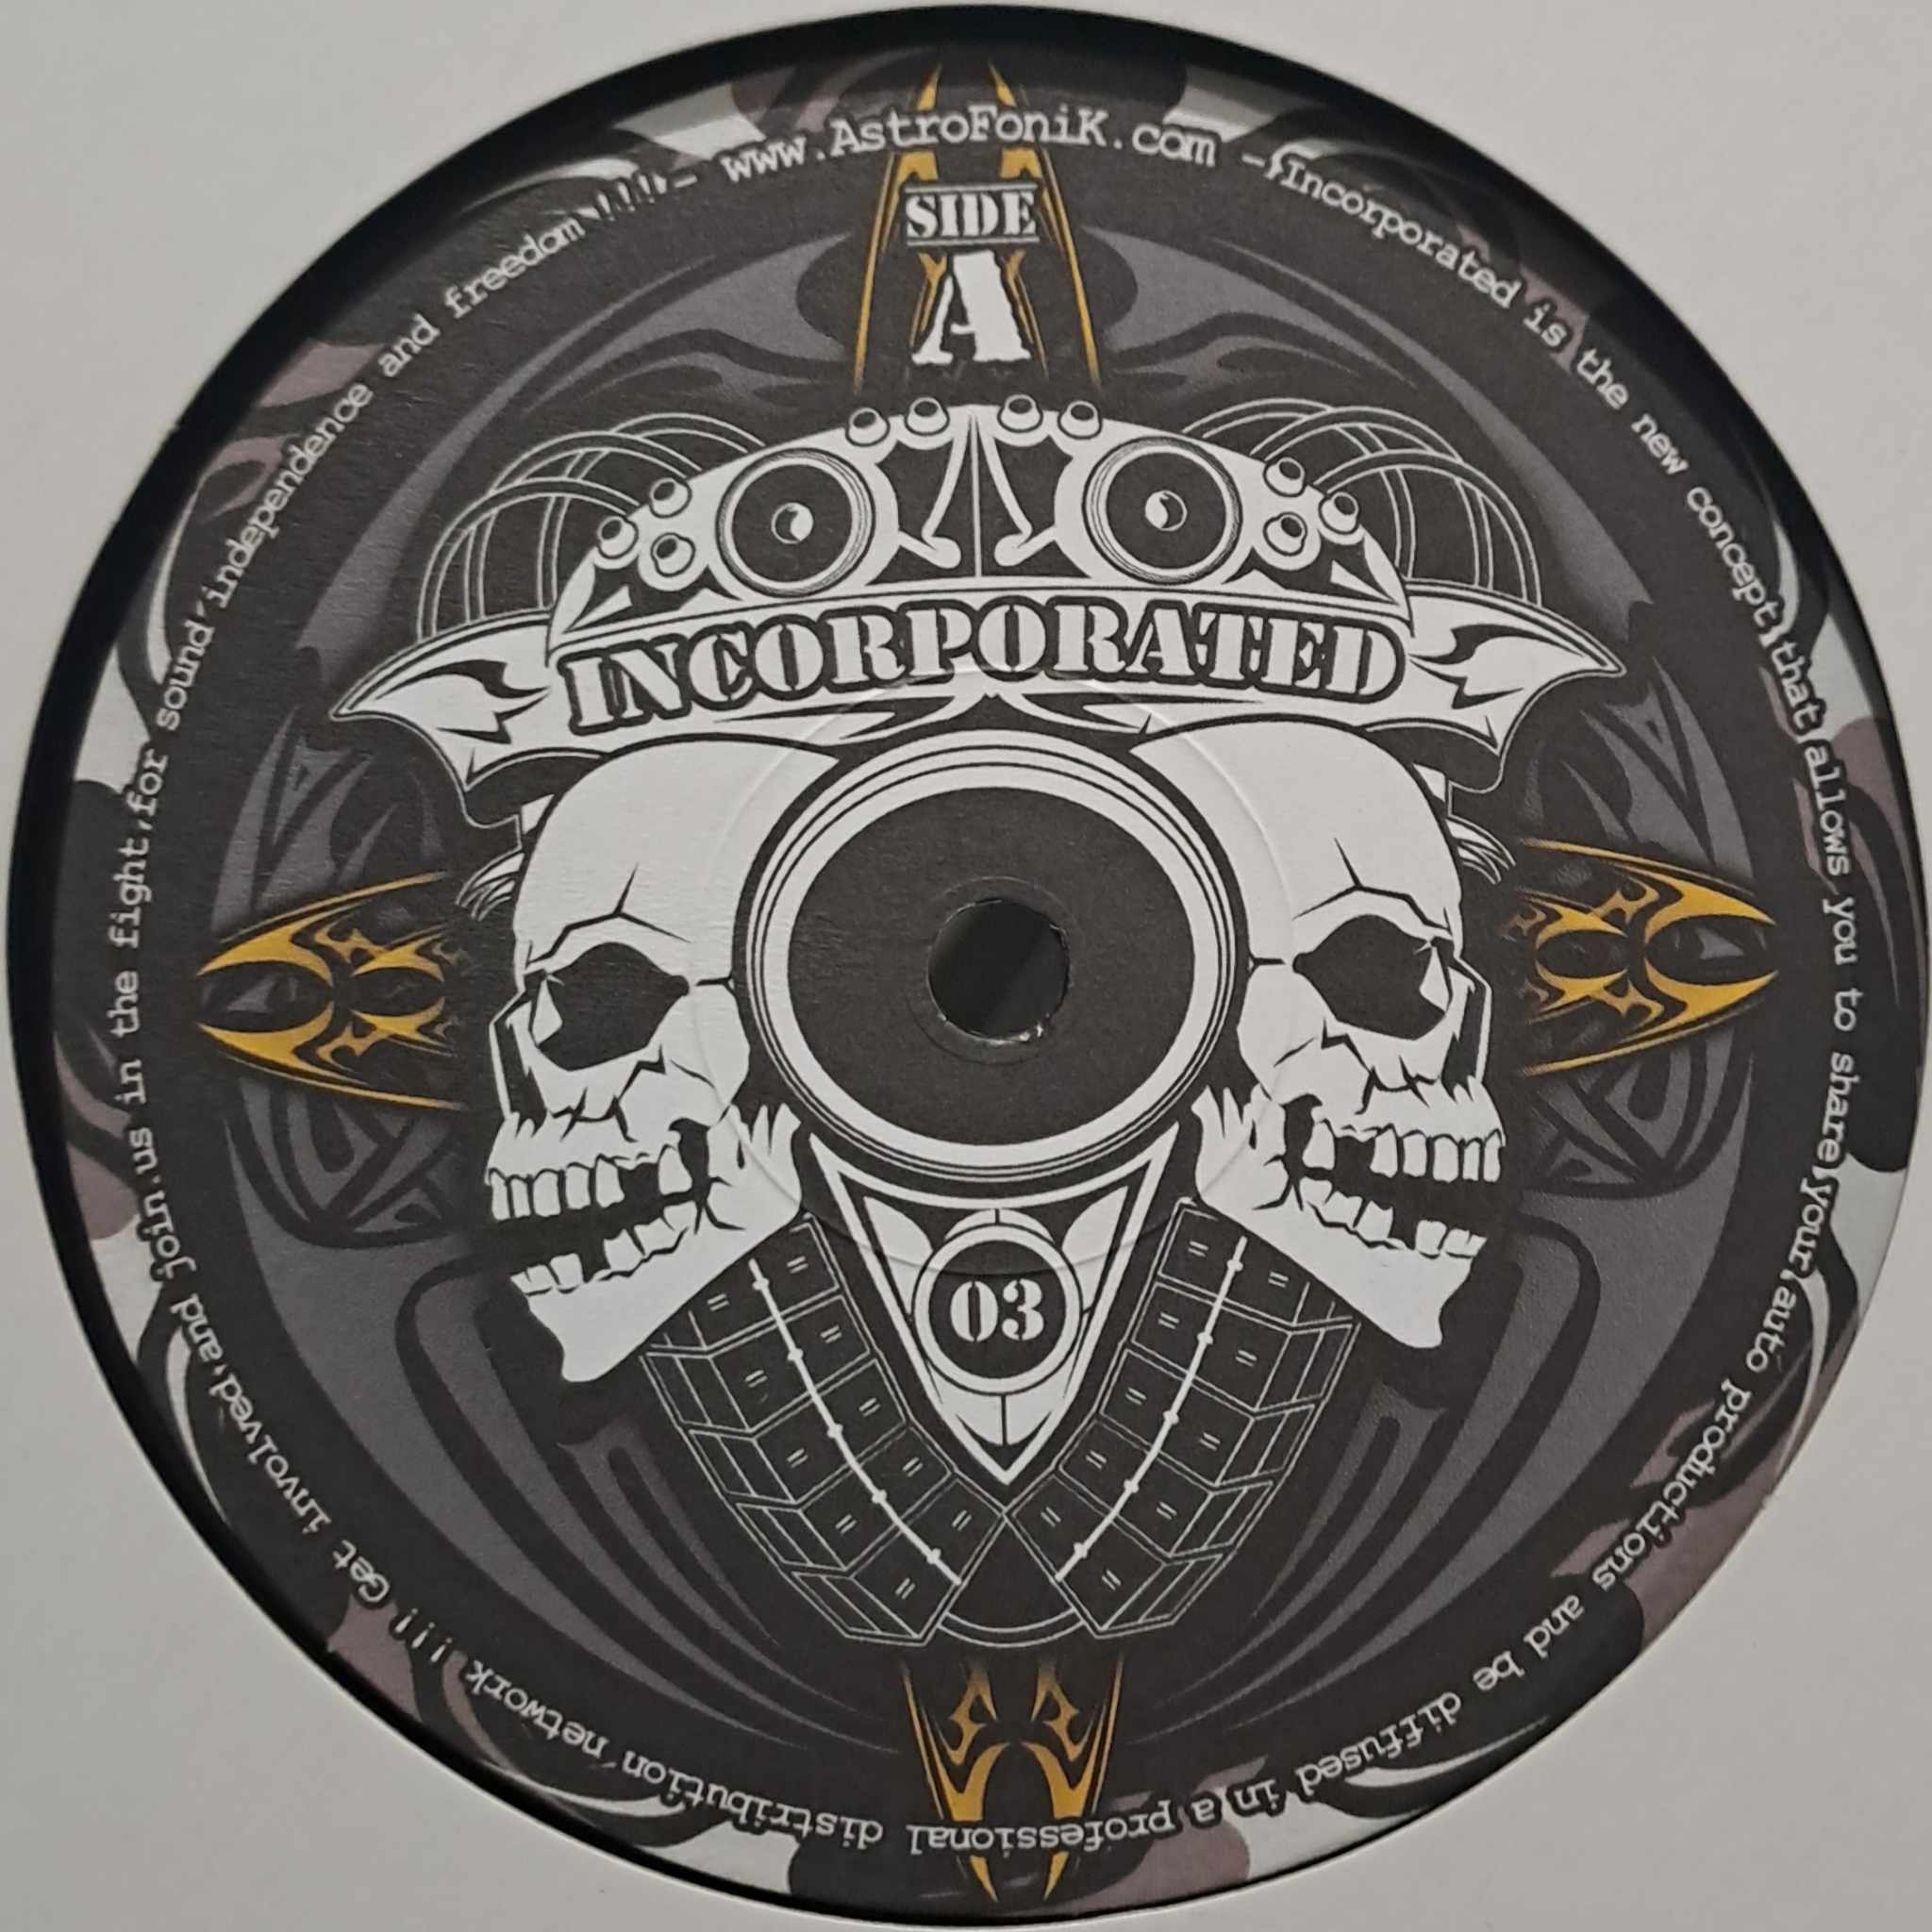 Incorporated 03 - vinyle tribecore